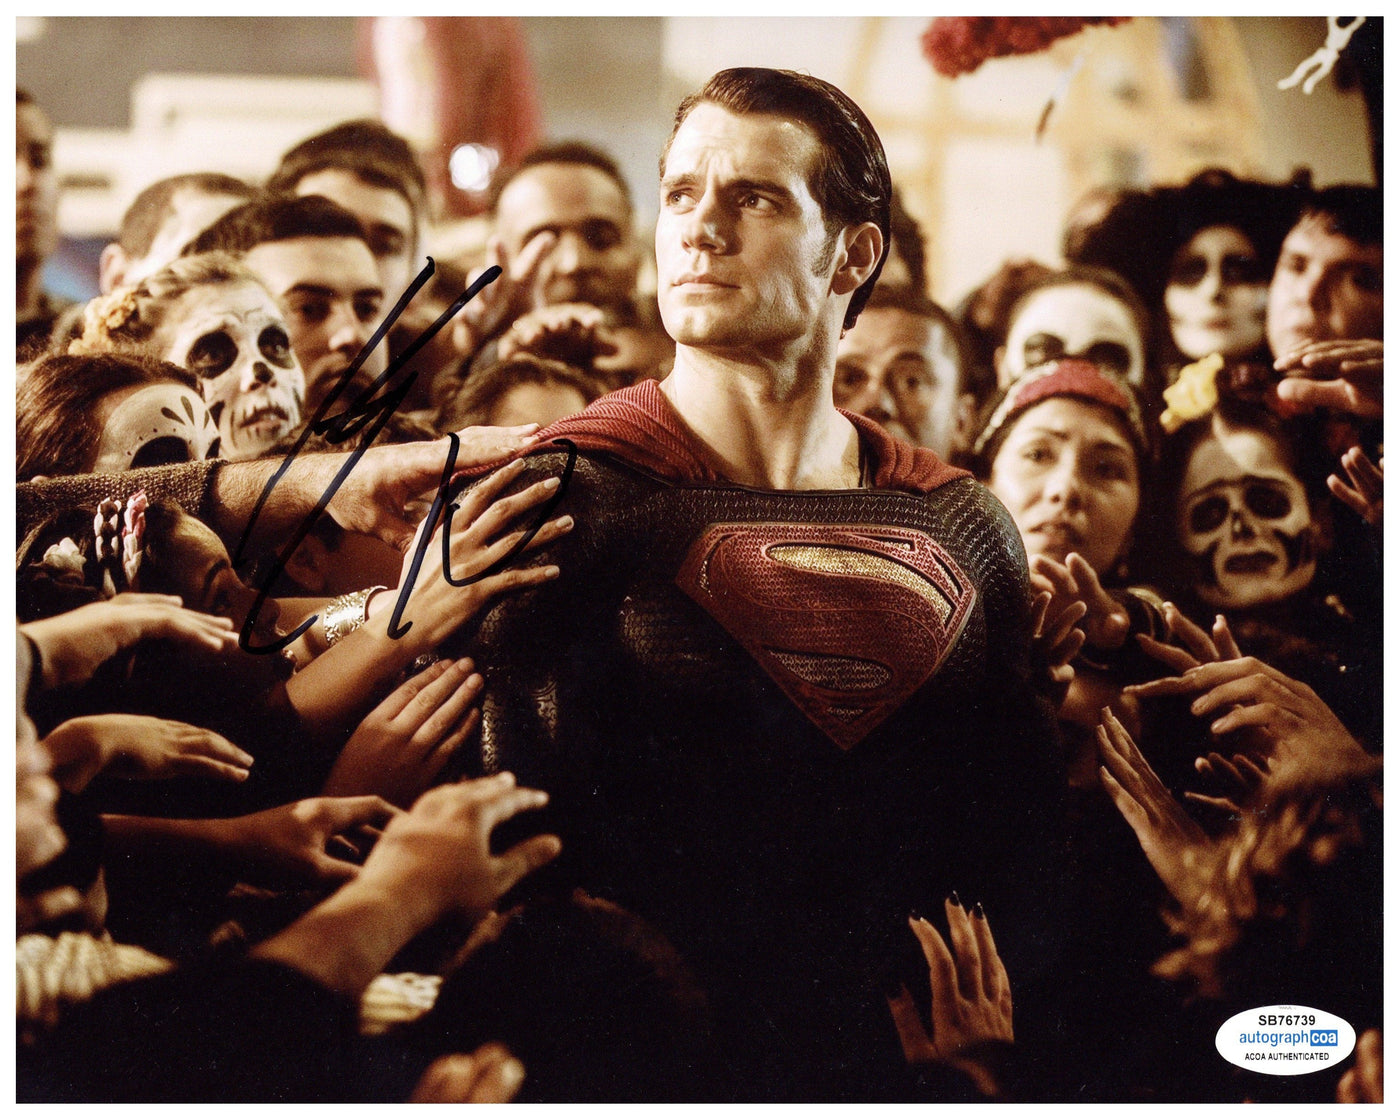 Henry Cavill Signed 8x10 Photo DC Superman Autographed ACOA 2